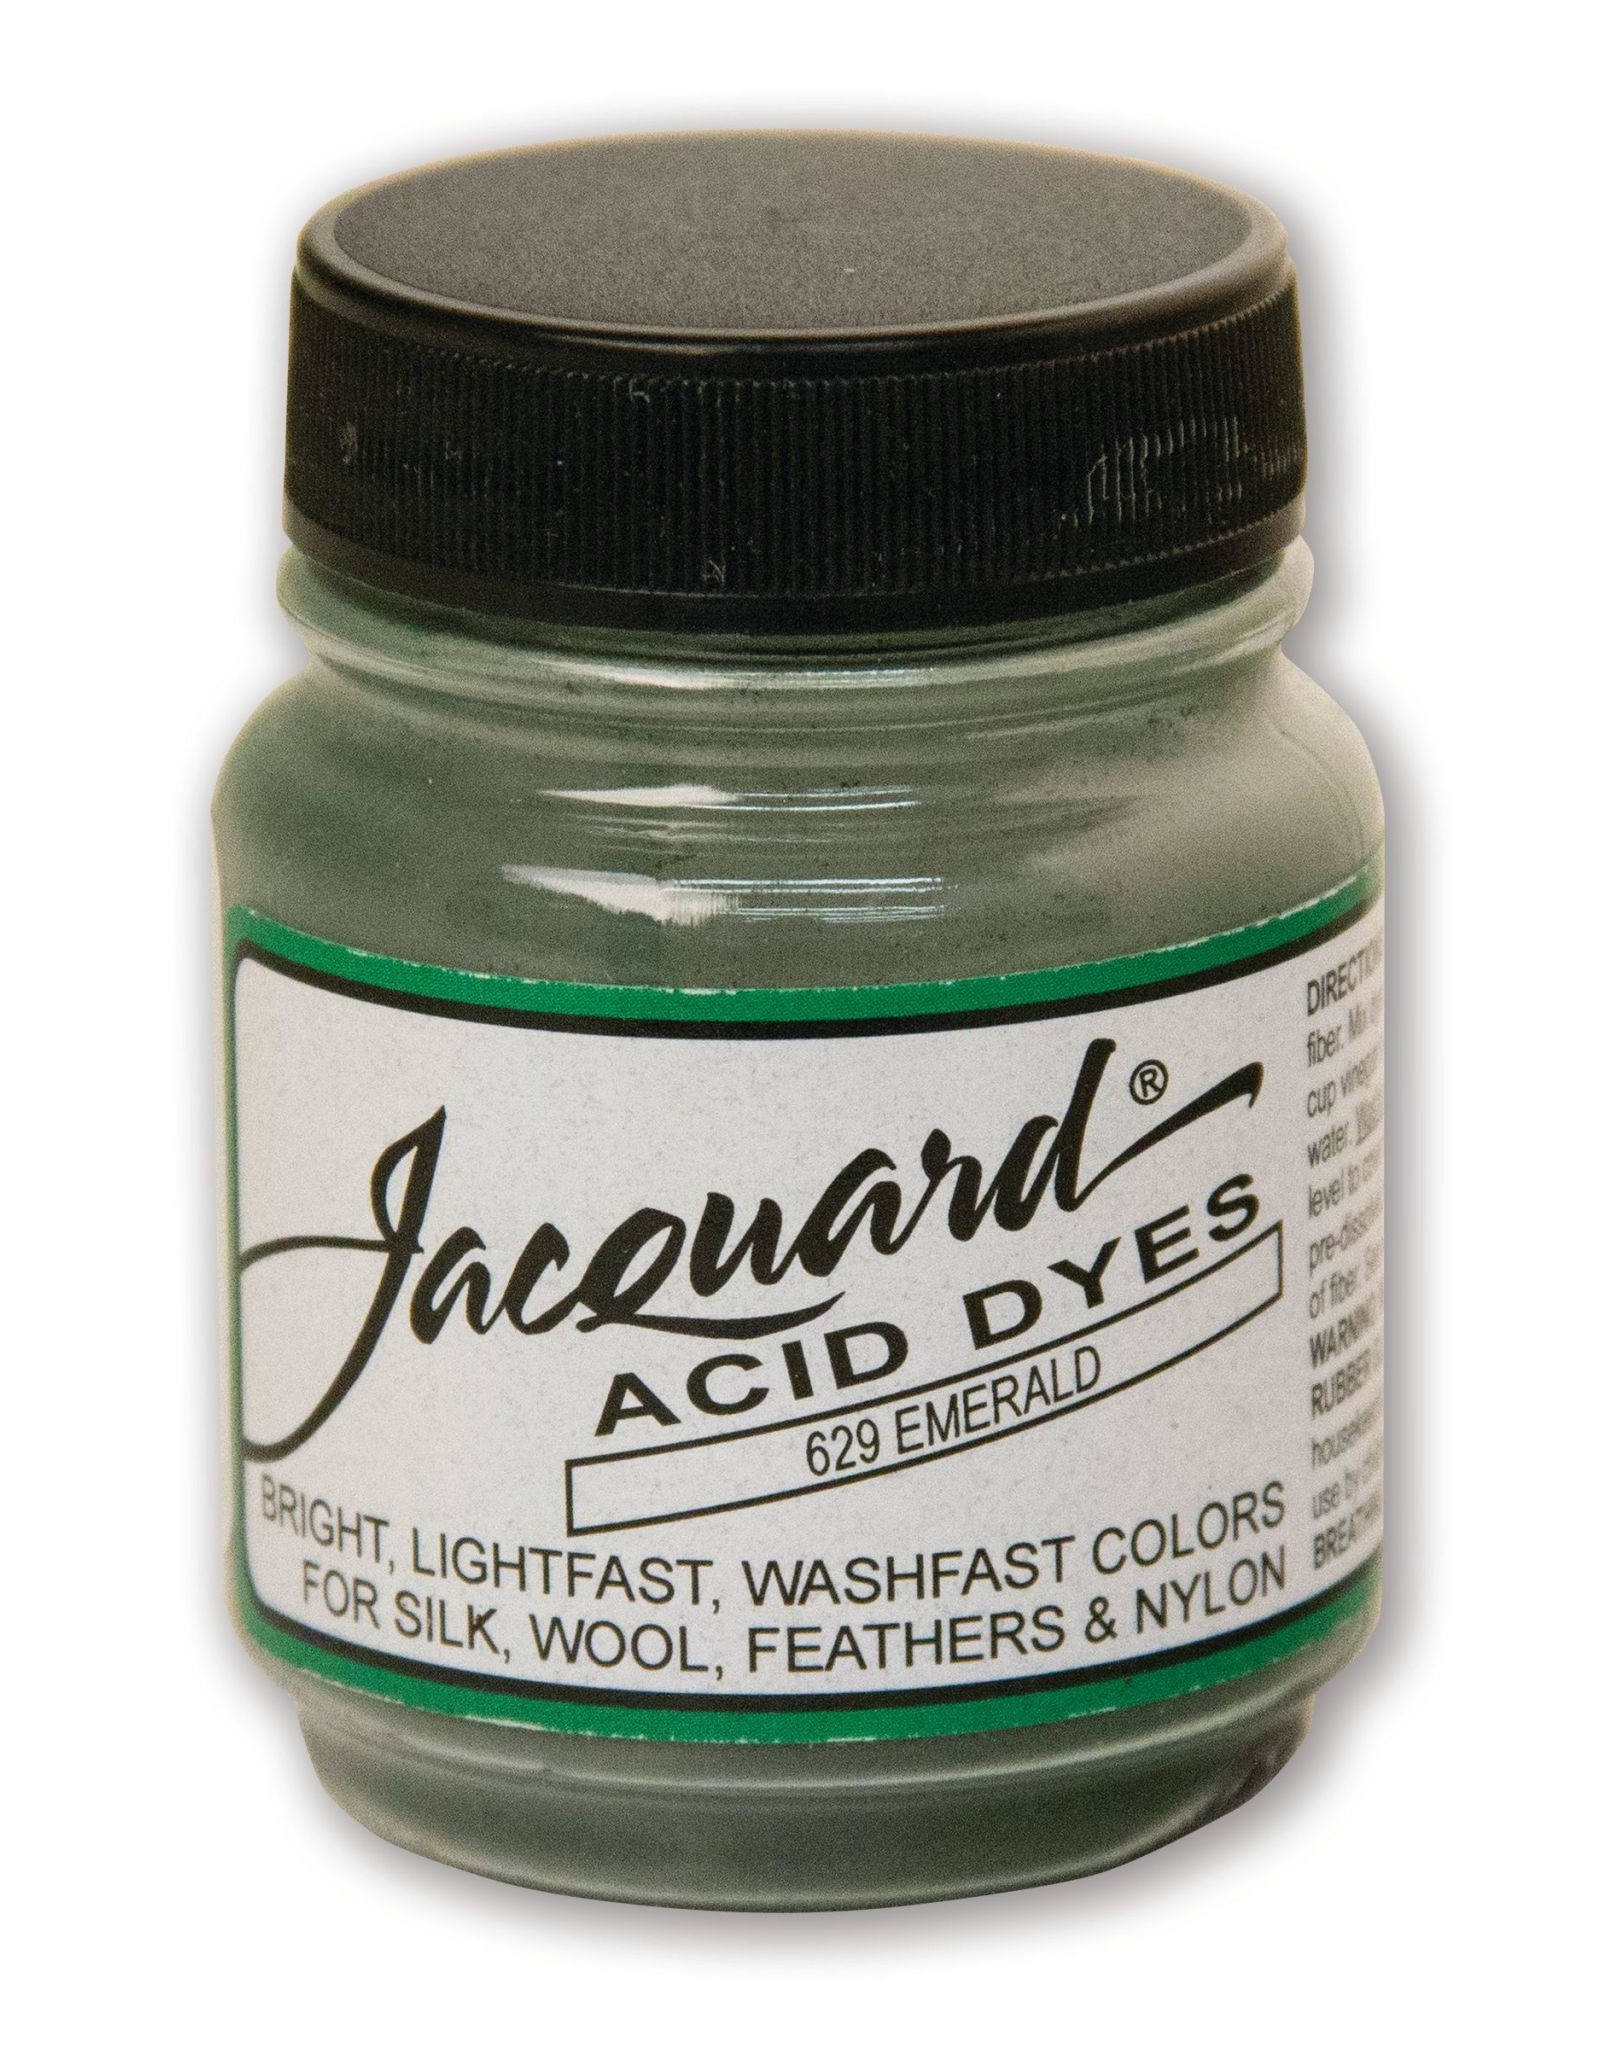 Jacquard Jacquard Acid Dye, #629 Emerald ½oz